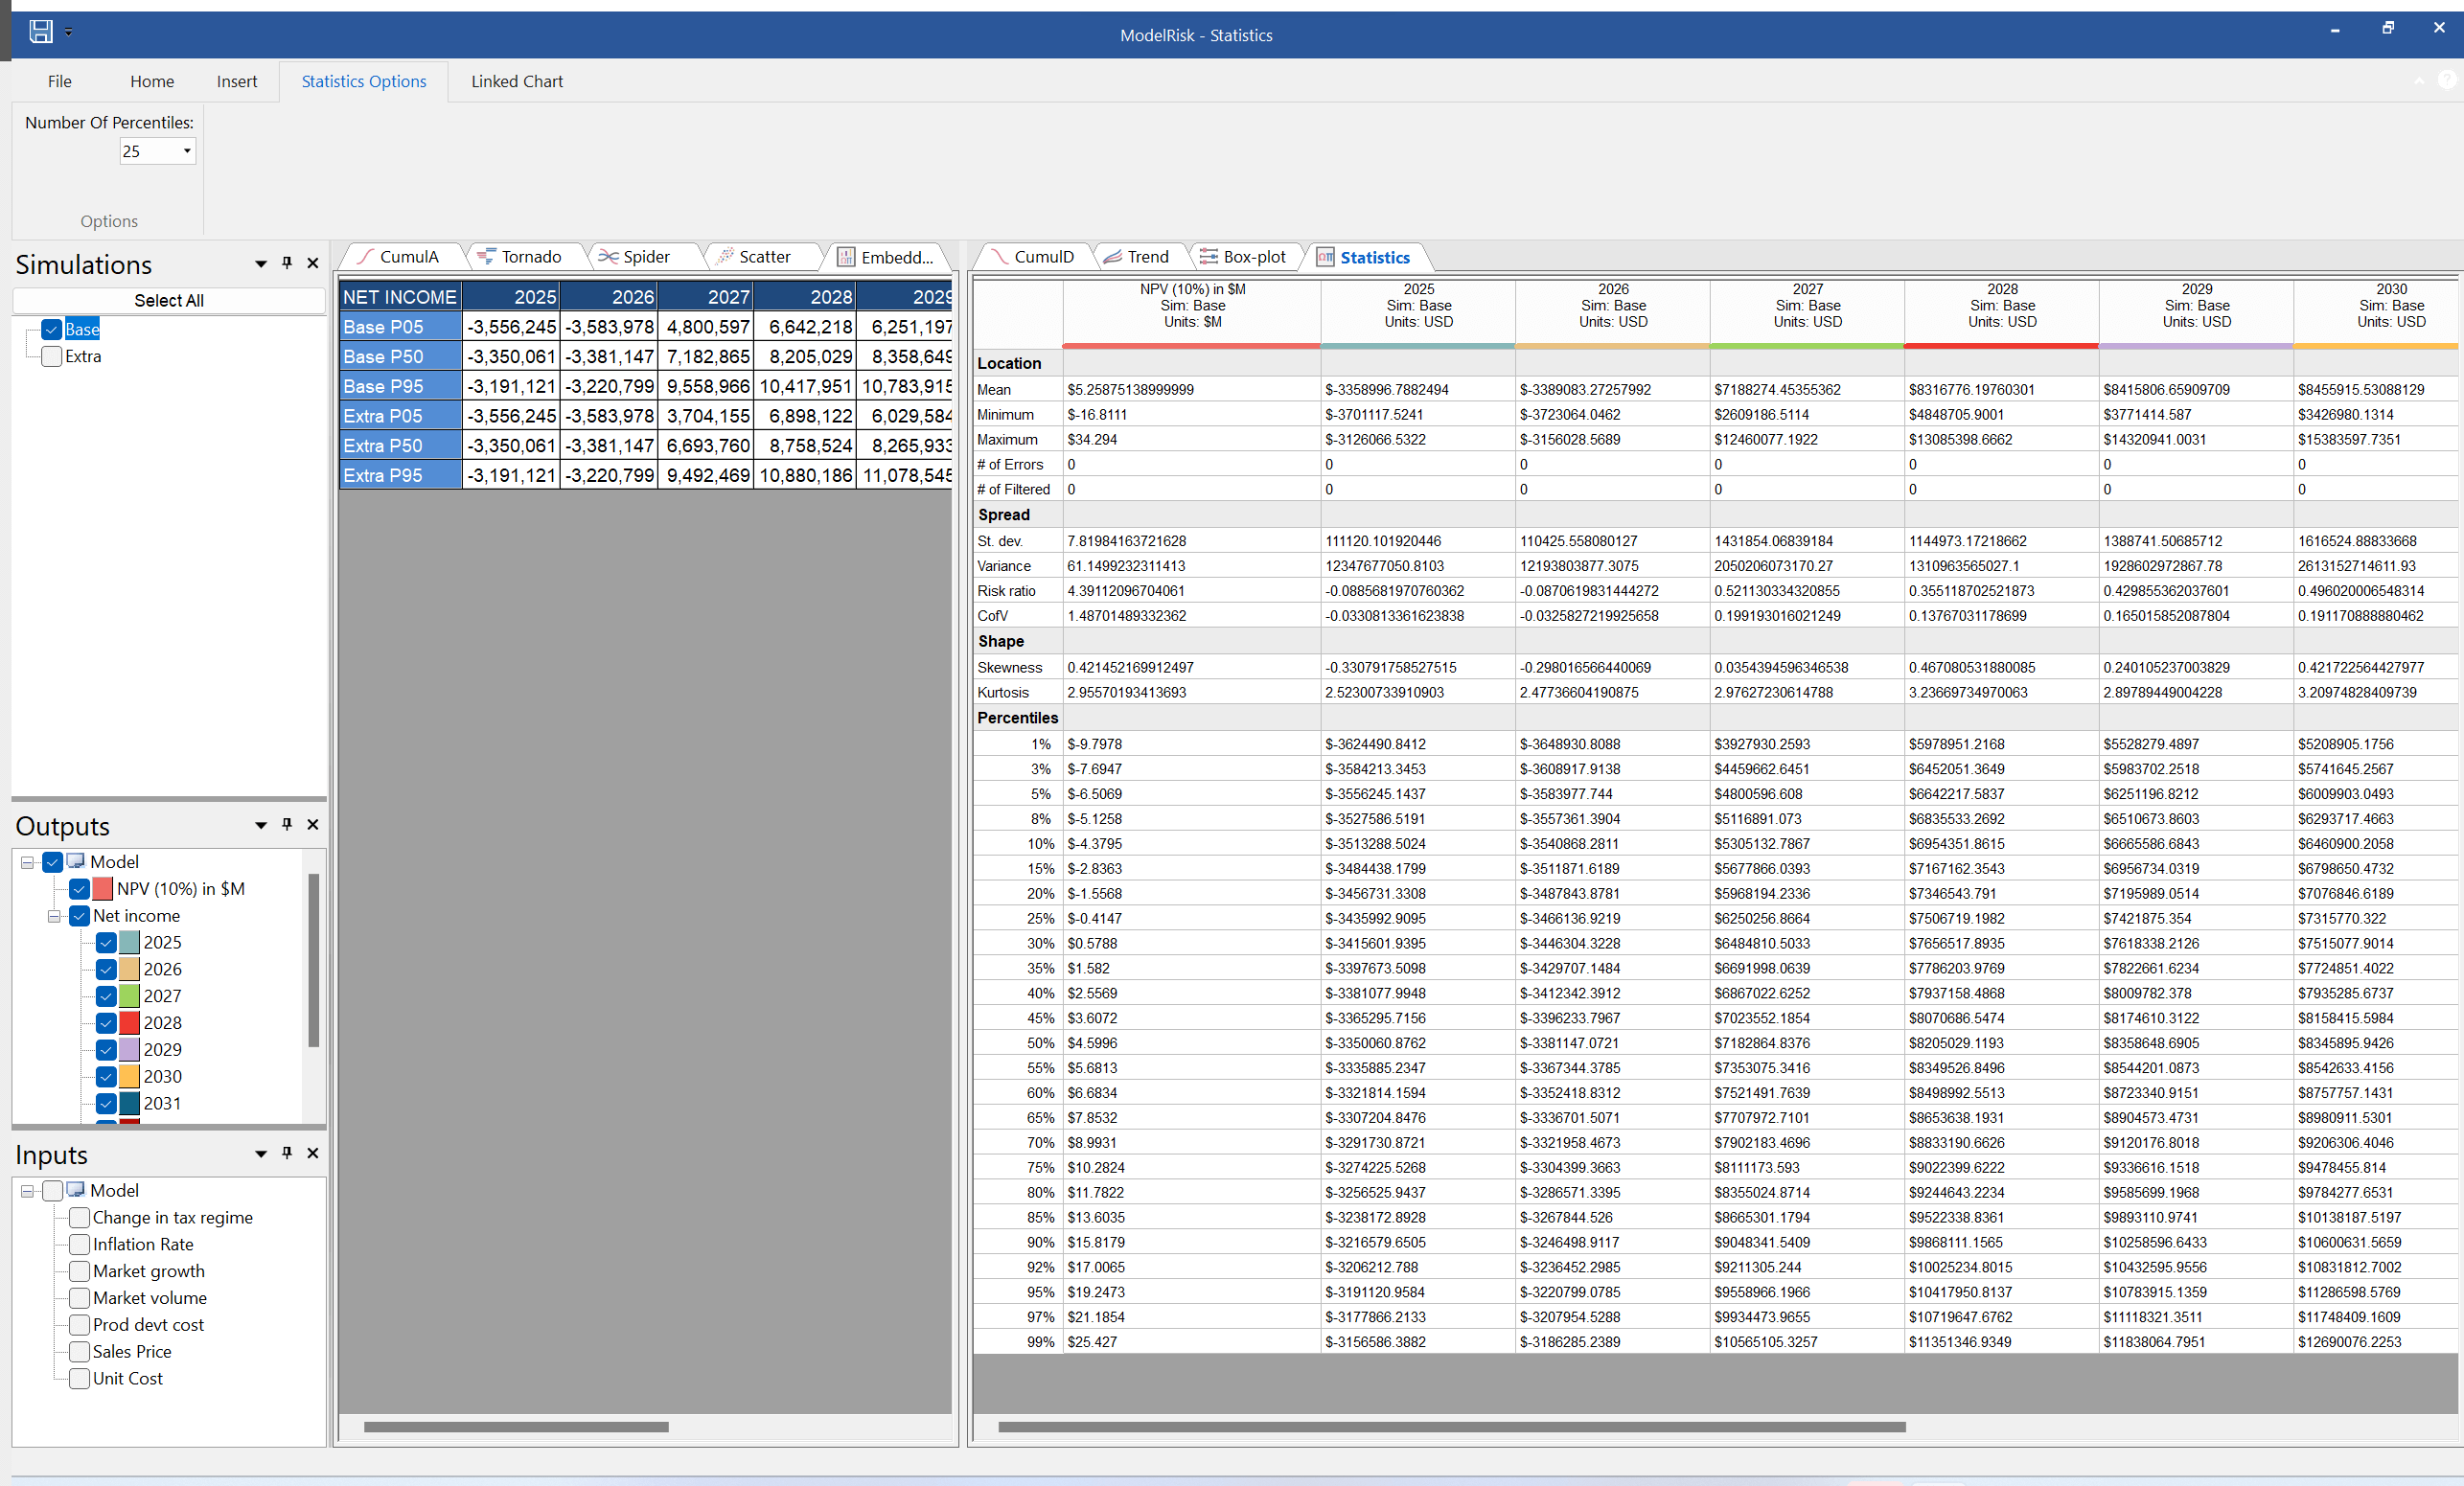 Simulation results statistics output